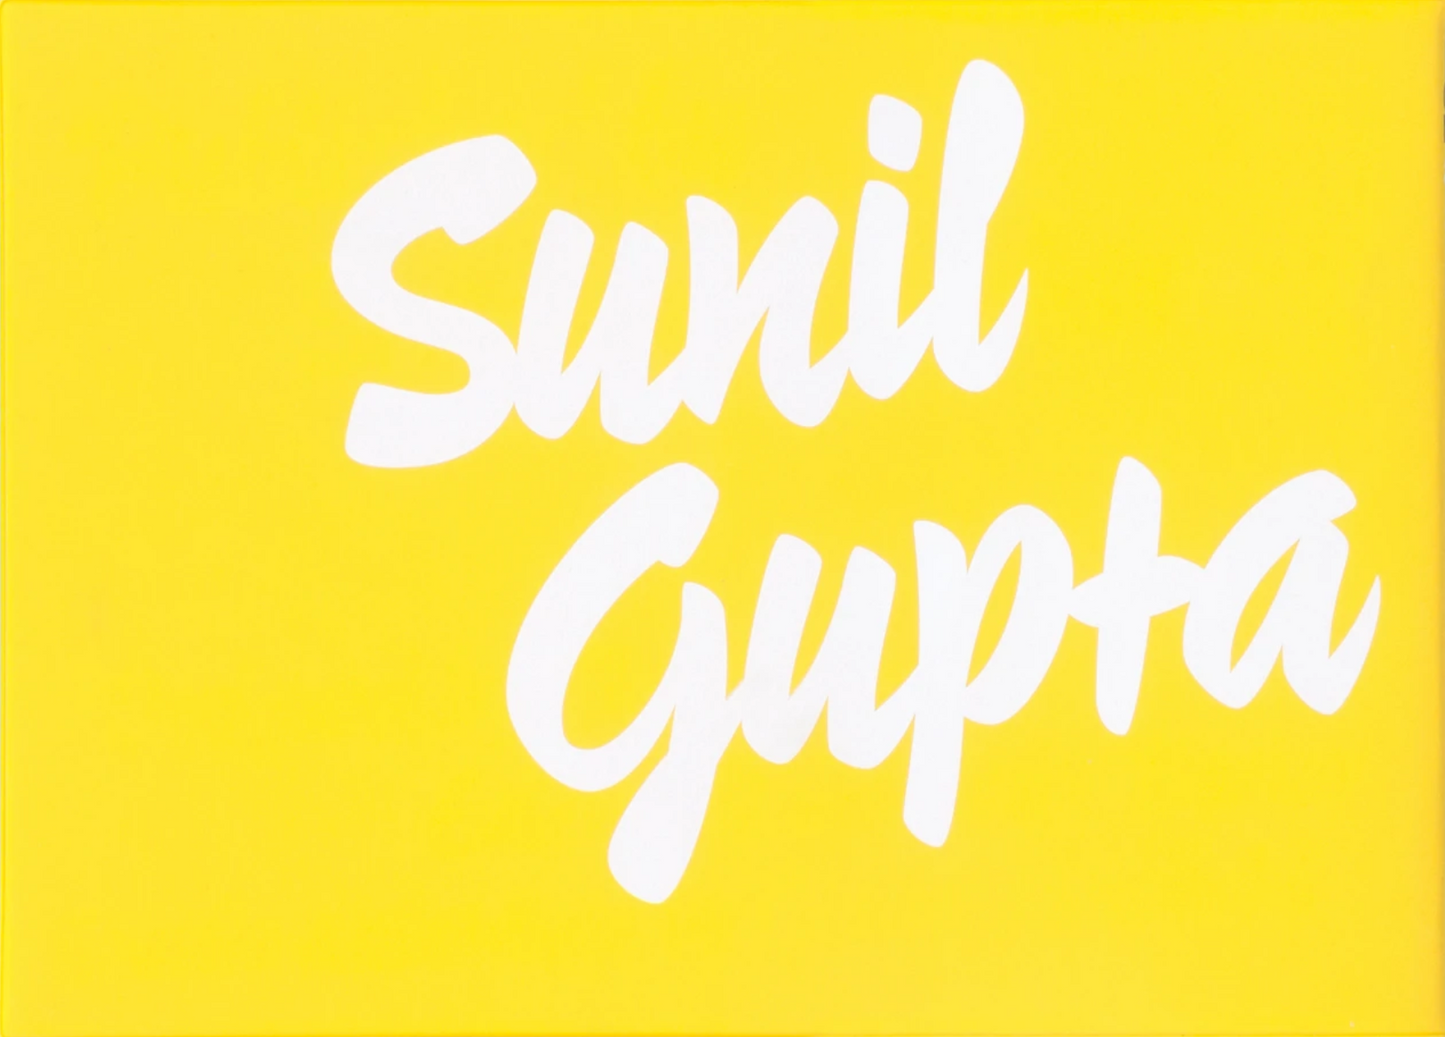 Sunil Gupta - London 82